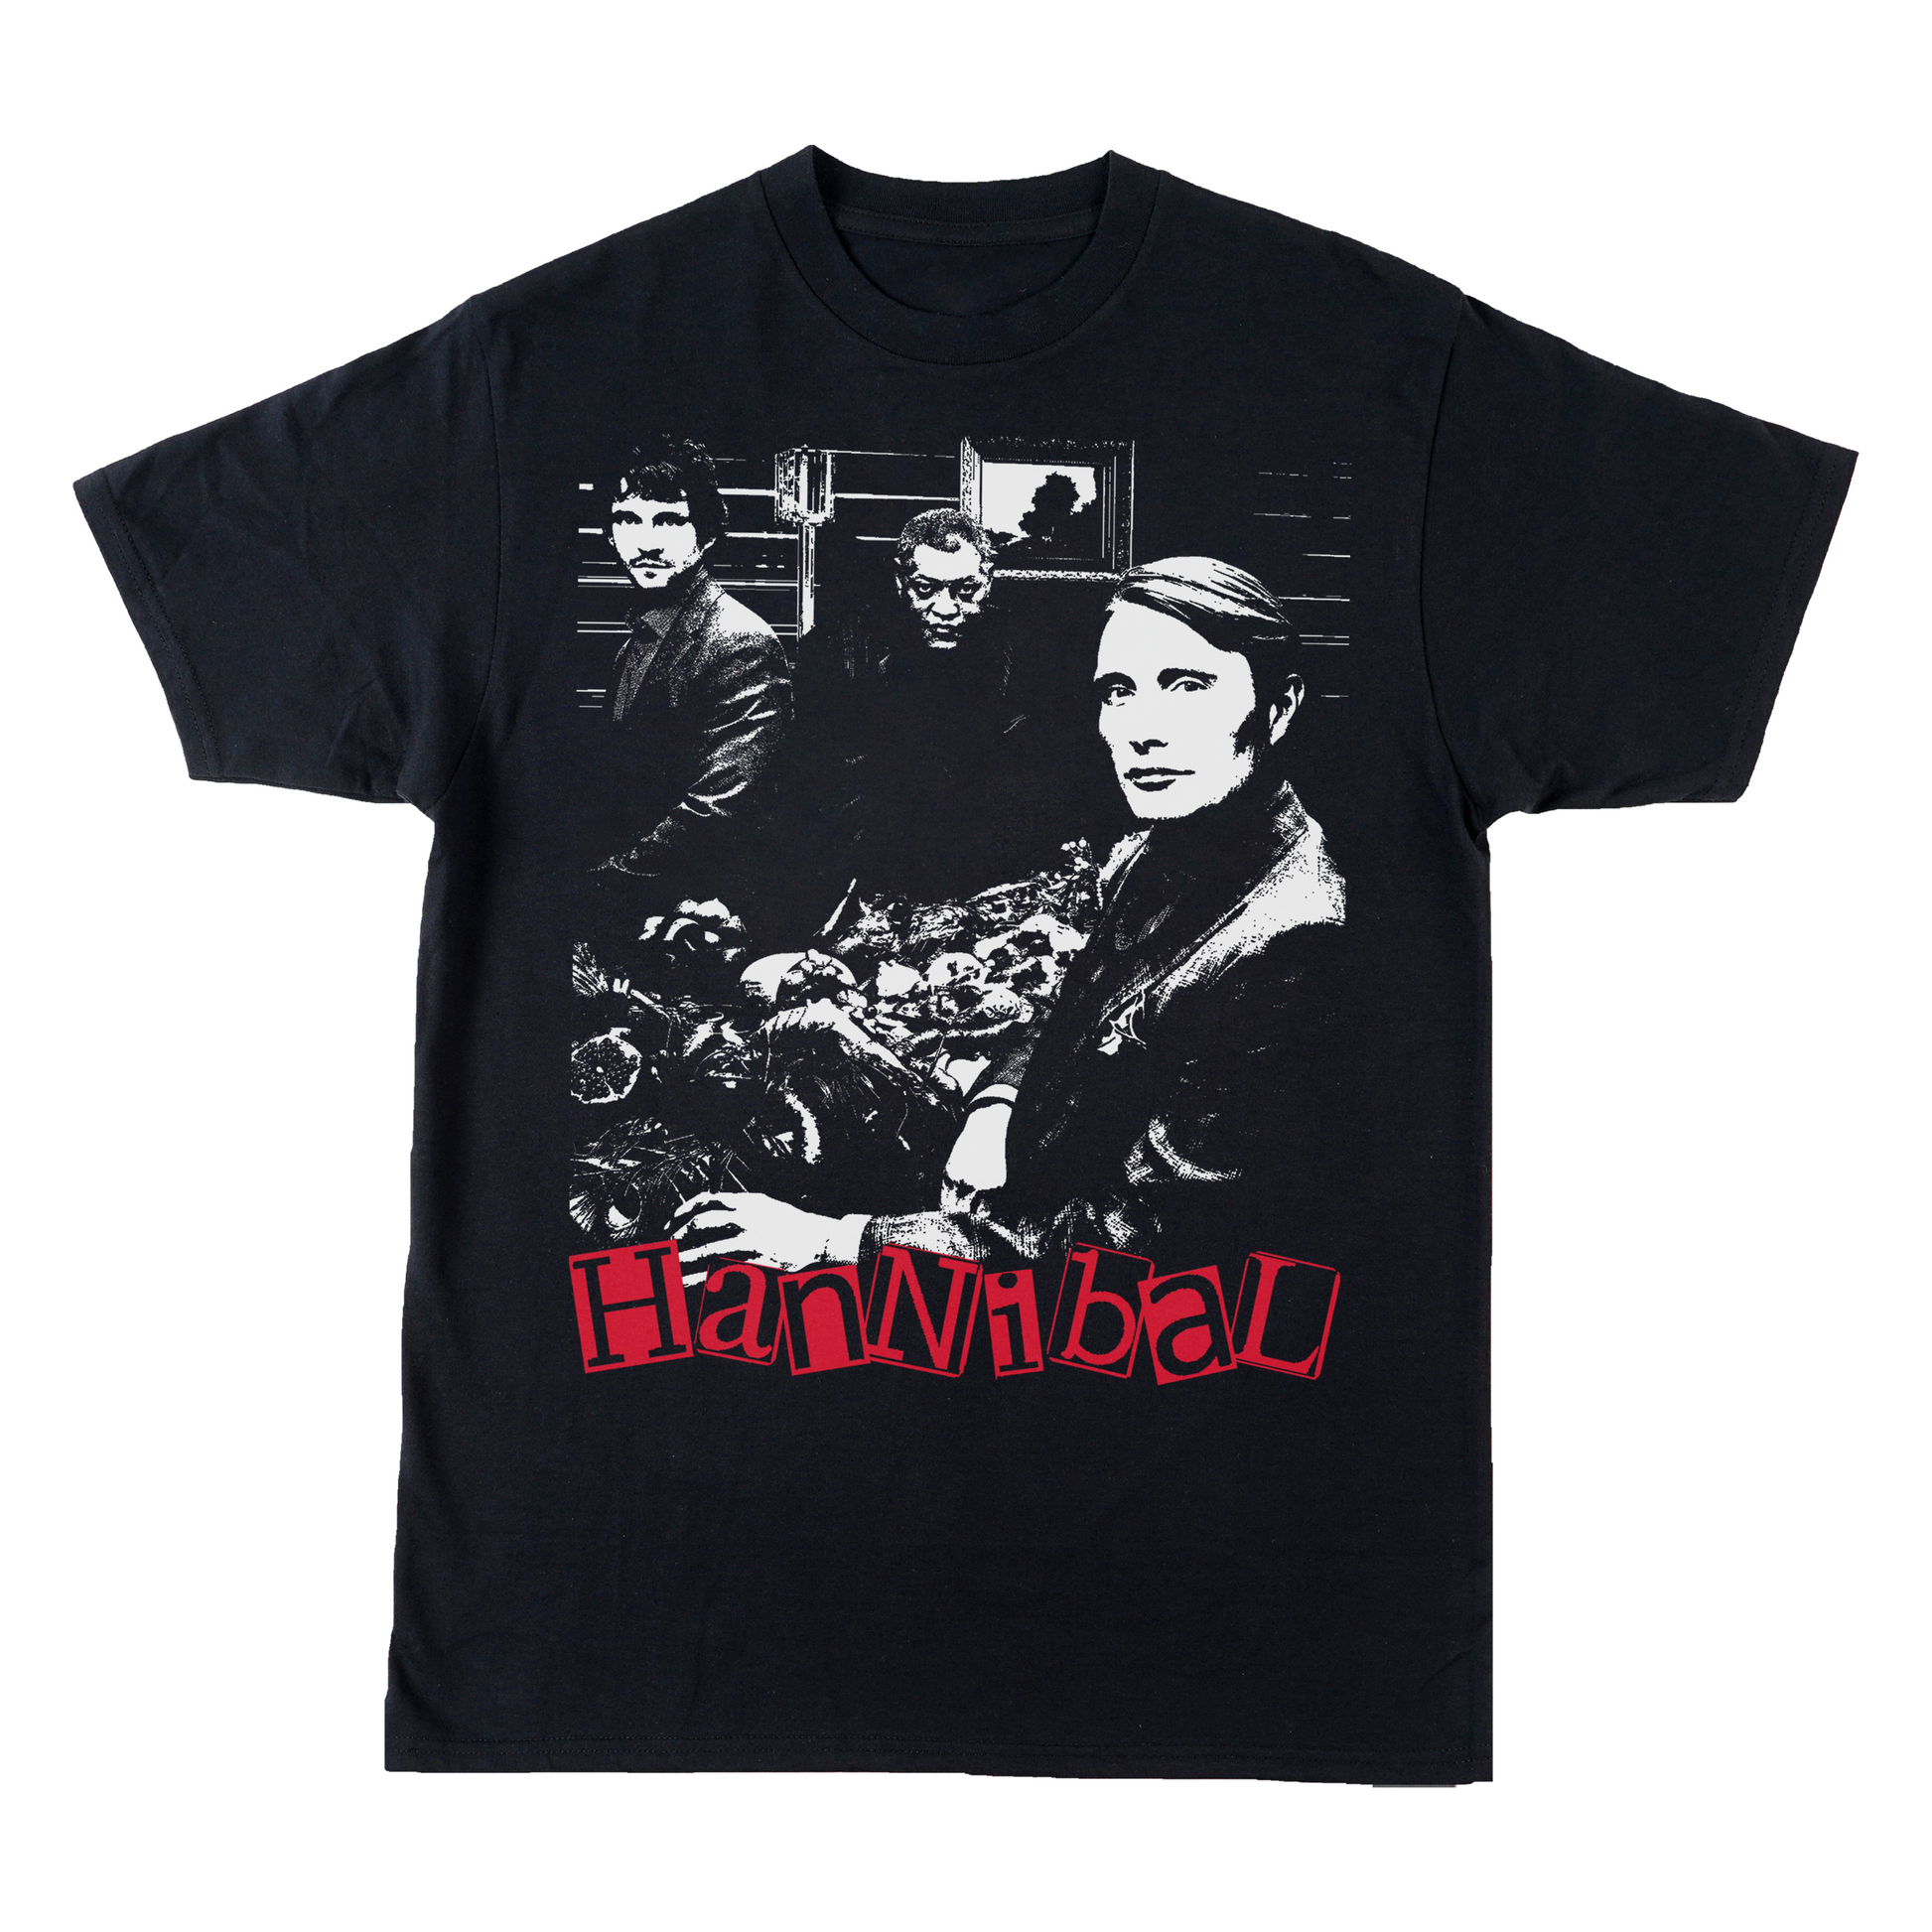 The Hannibal Shirt